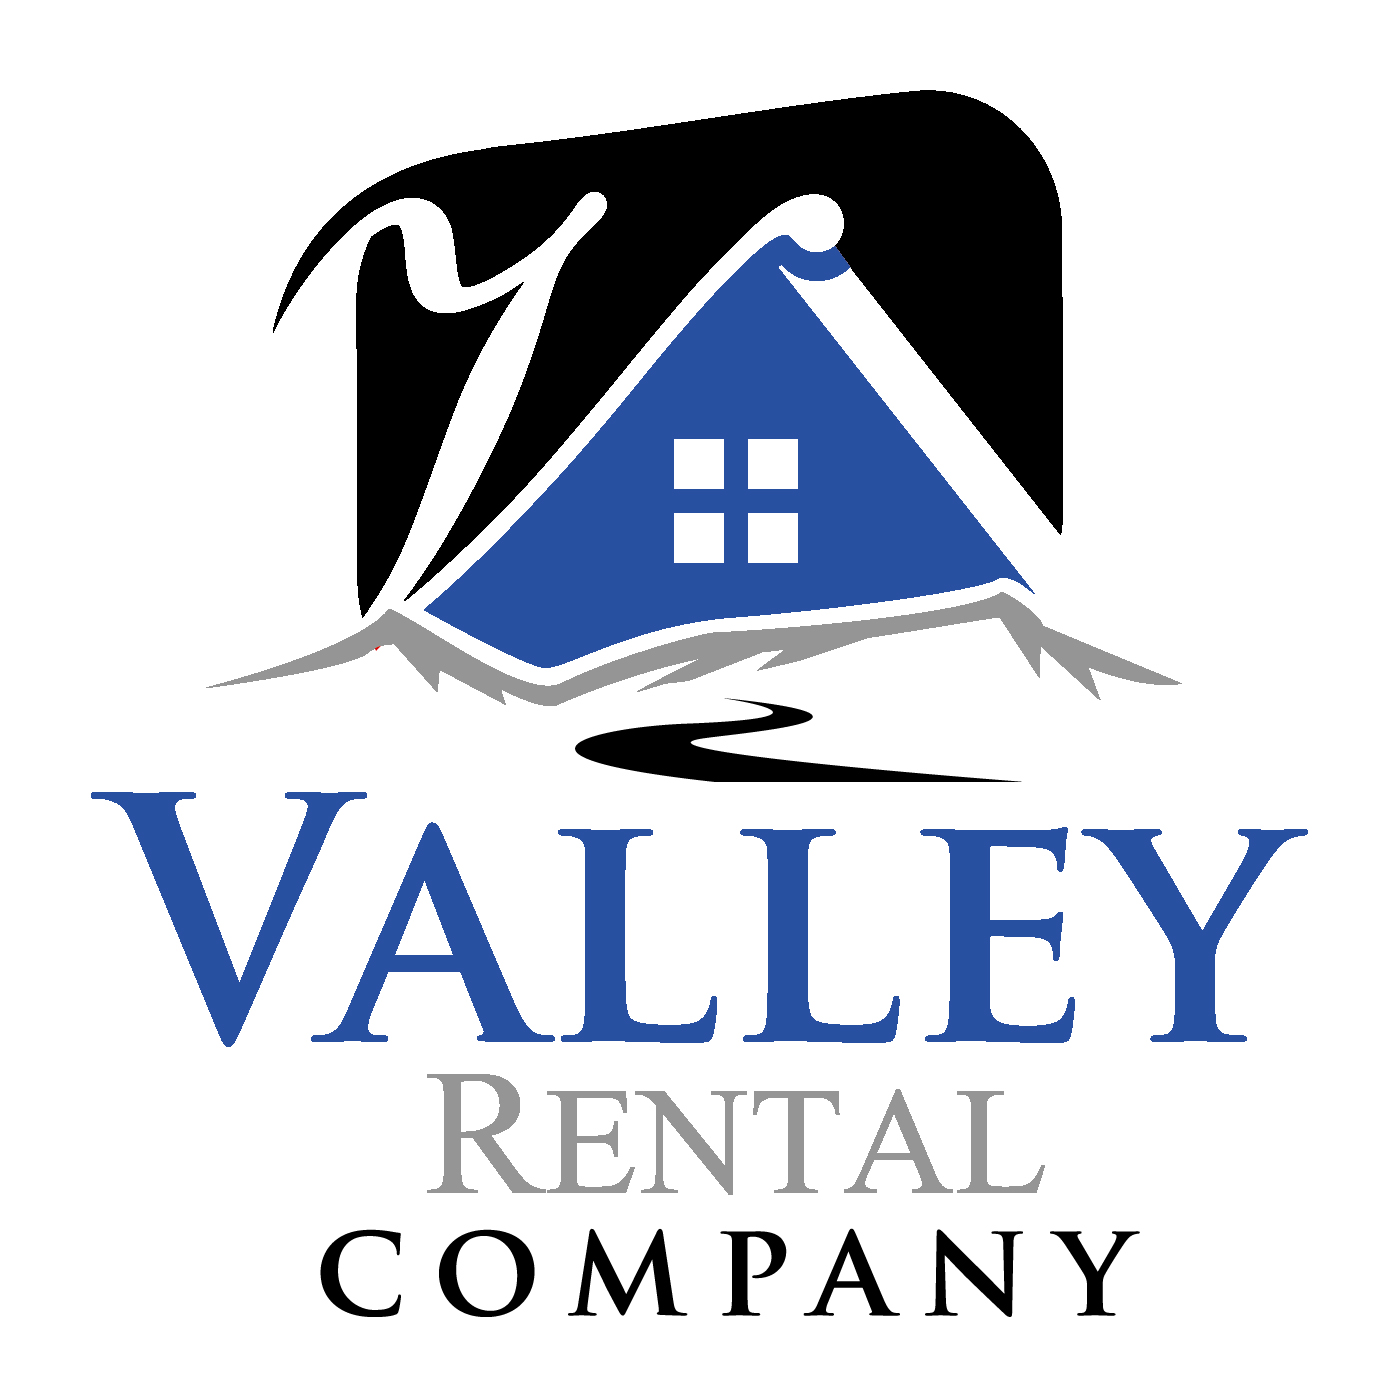 Valley Rental Company & Property Management logo